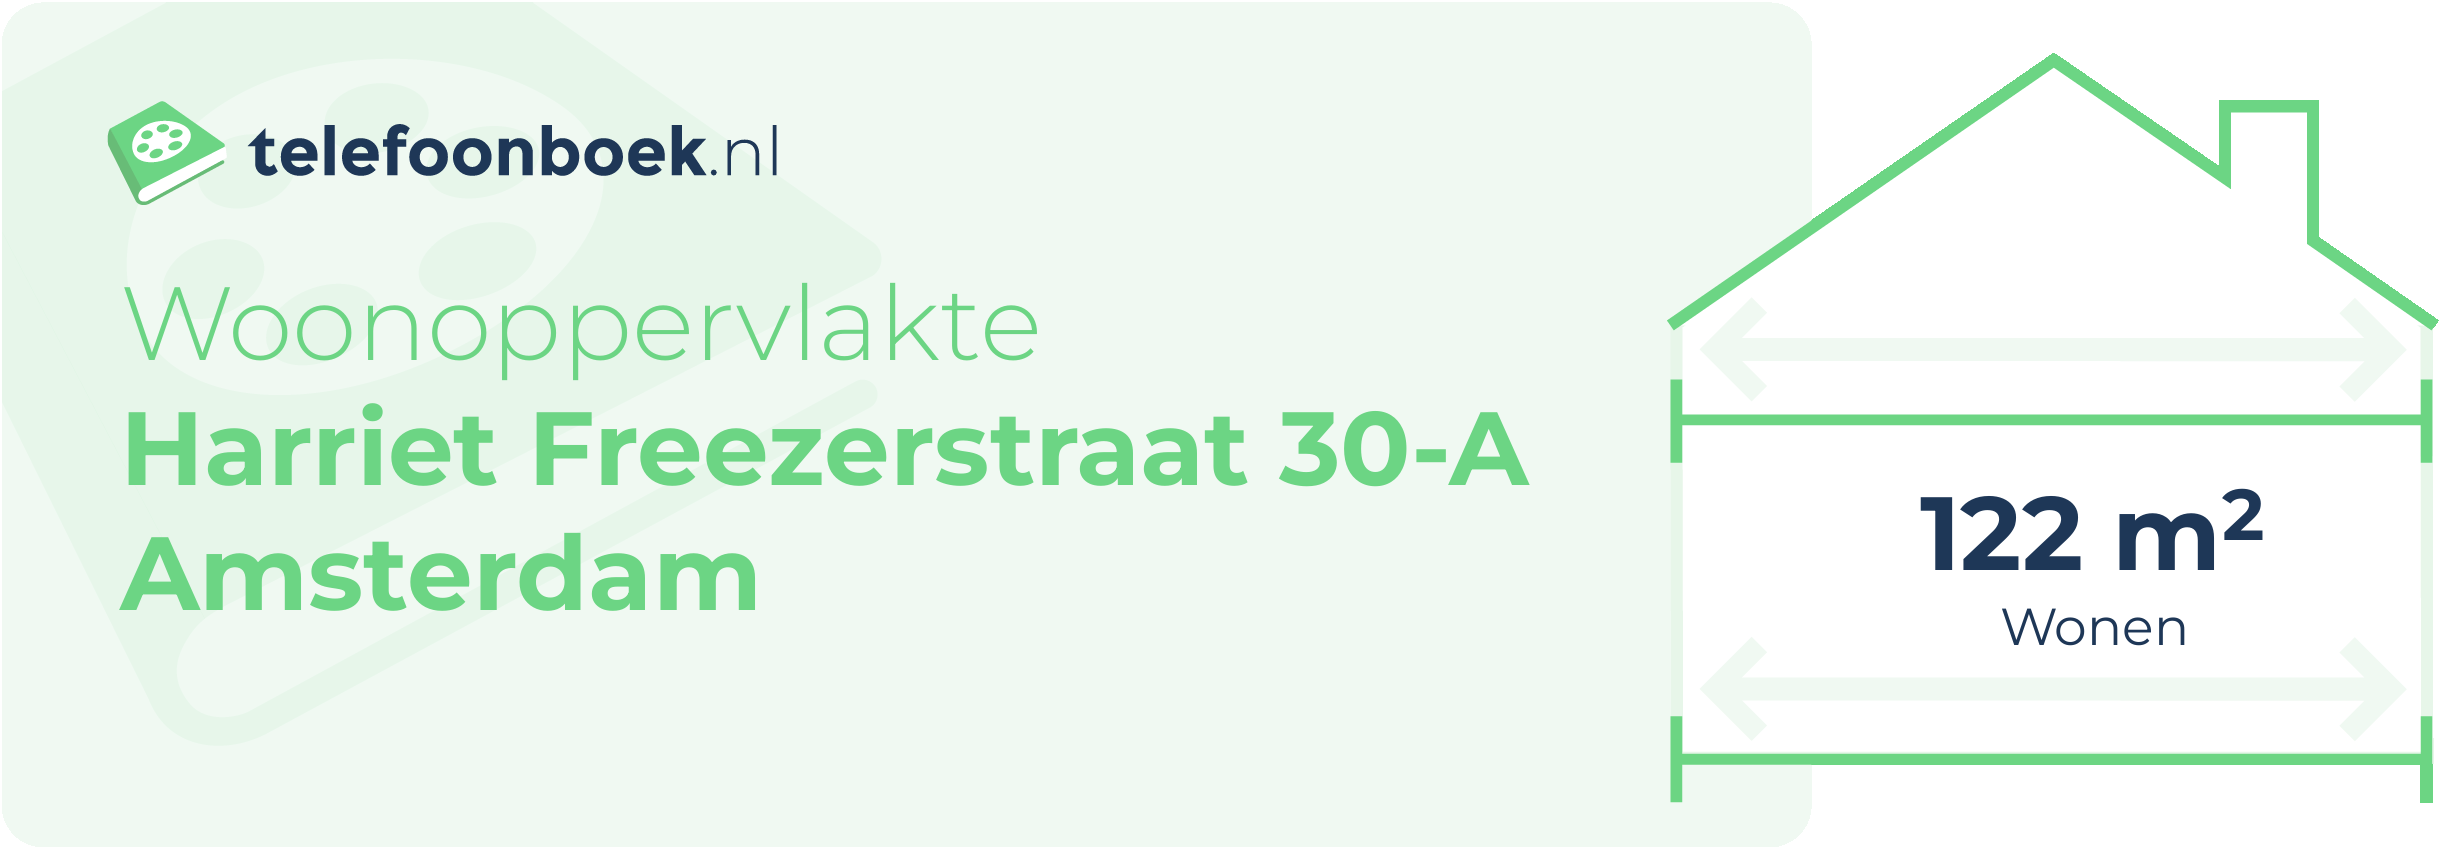 Woonoppervlakte Harriet Freezerstraat 30-A Amsterdam